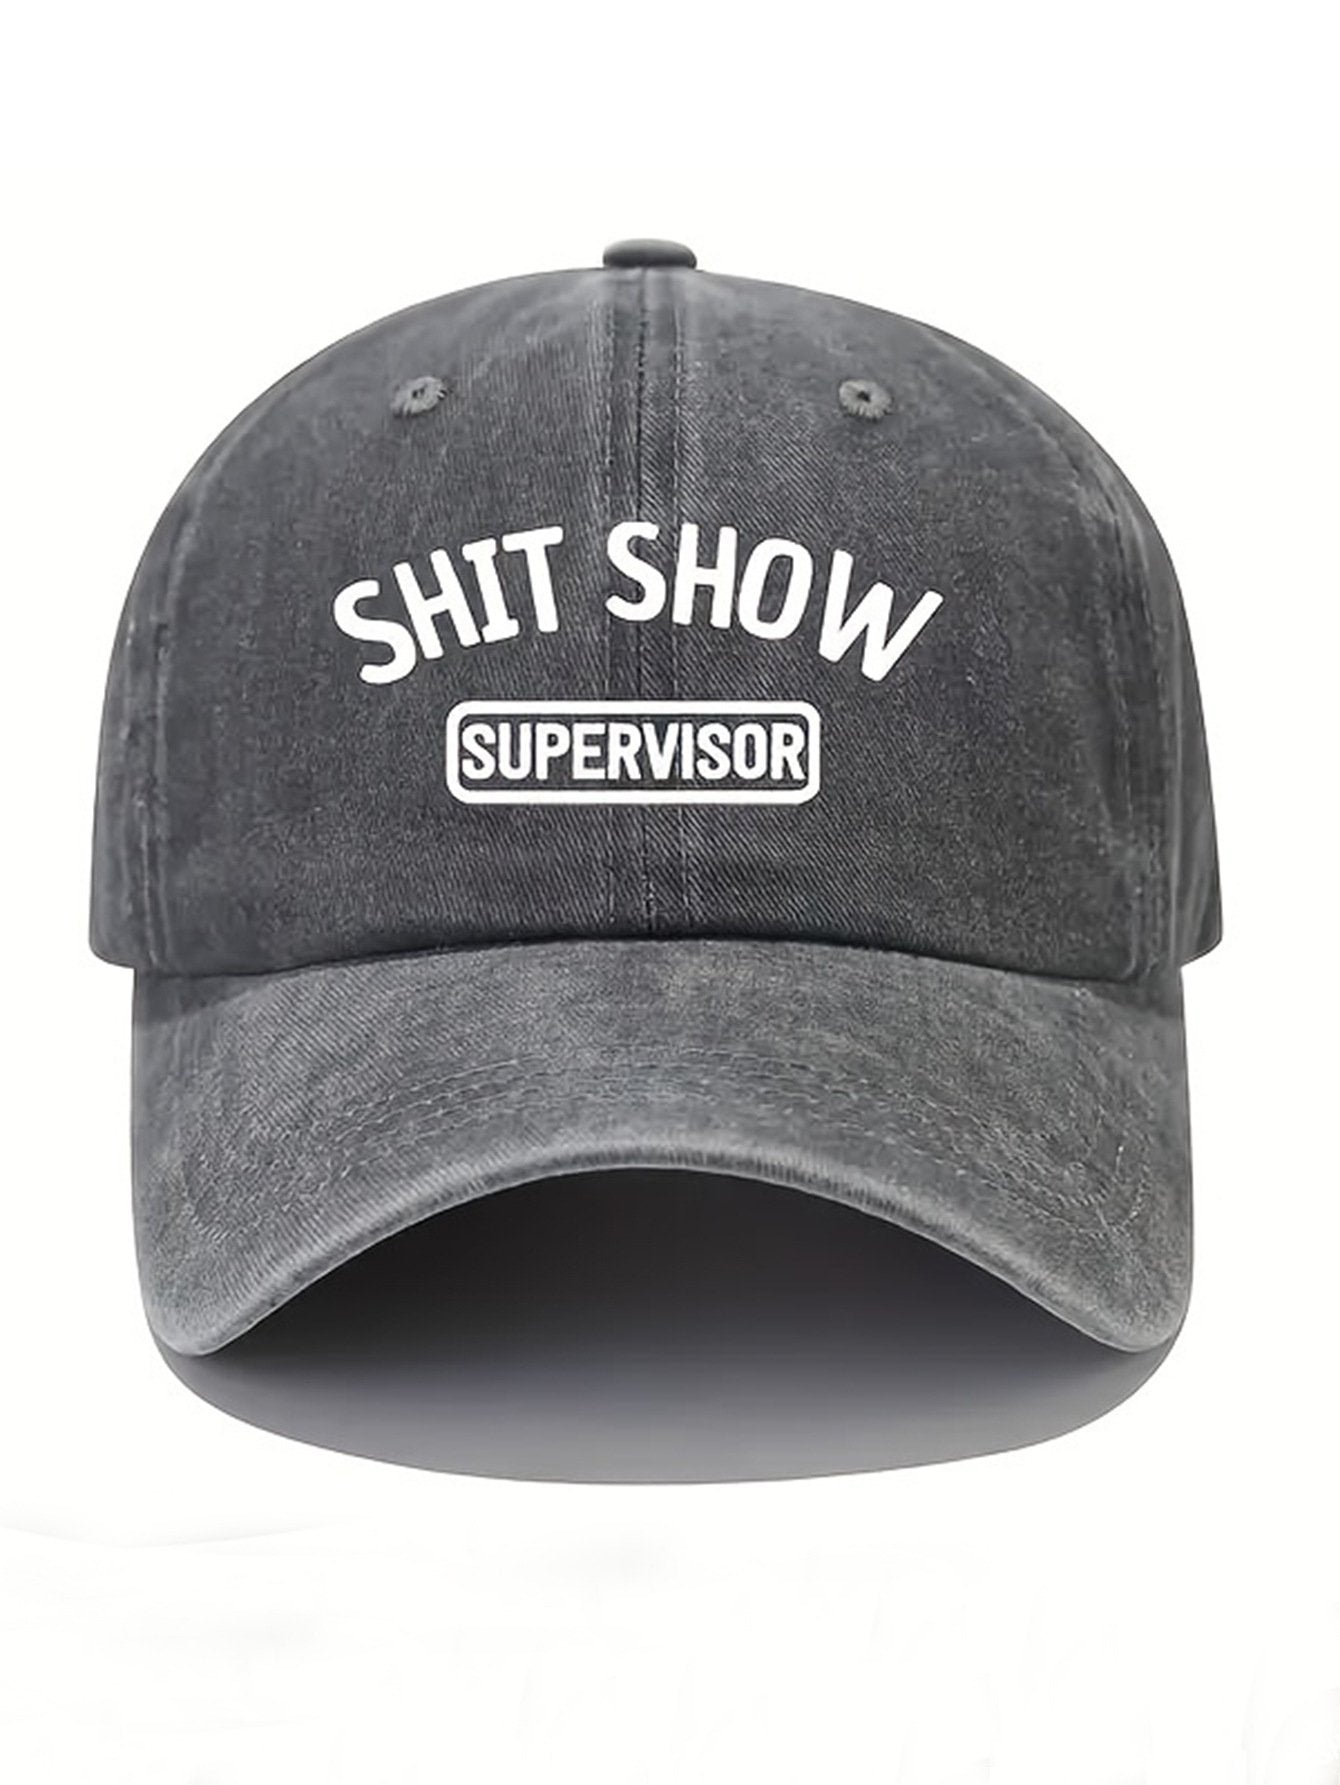 Shit Show Supervisor Funny Baseball Cap